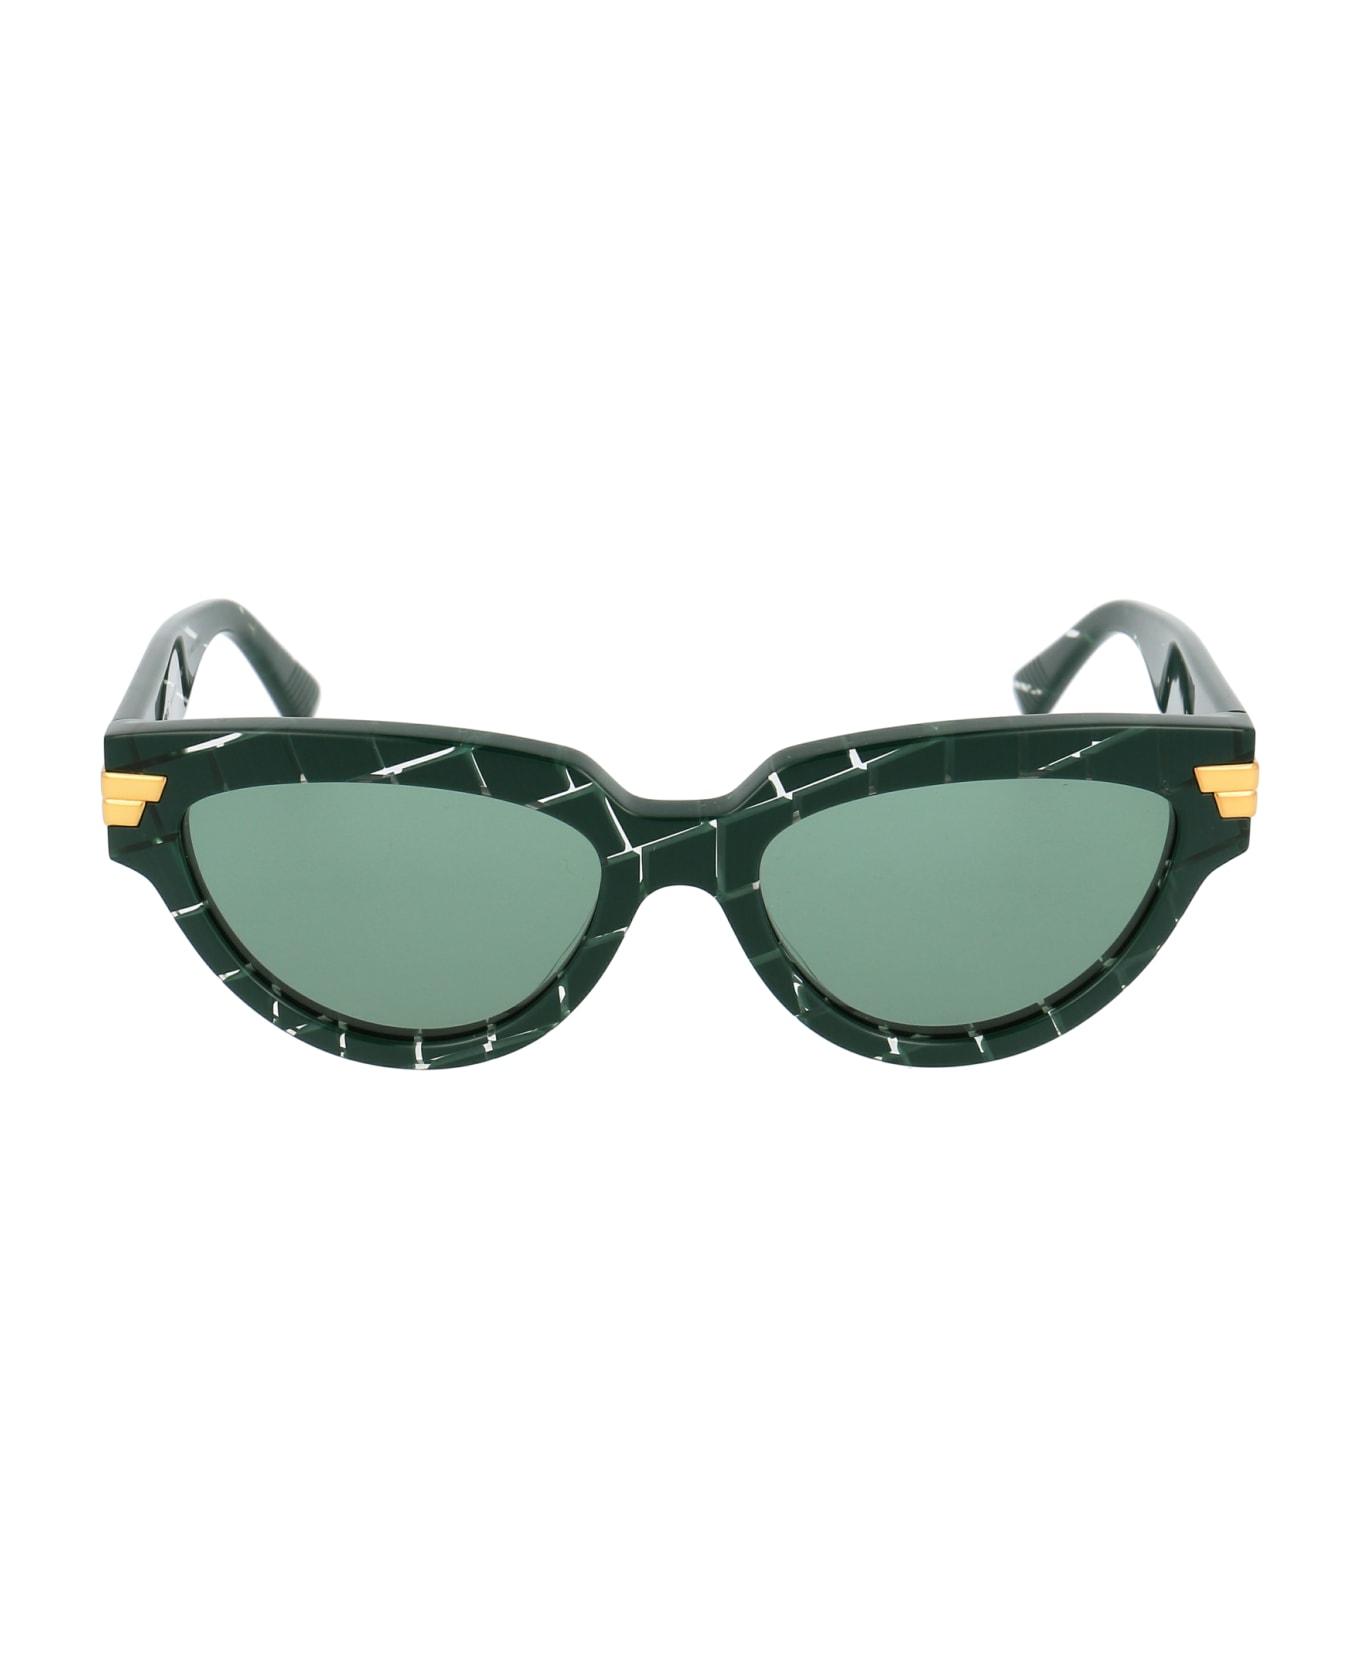 Bottega Veneta Eyewear Bv1035s Sunglasses - 004 GREEN GREEN GREEN サングラス